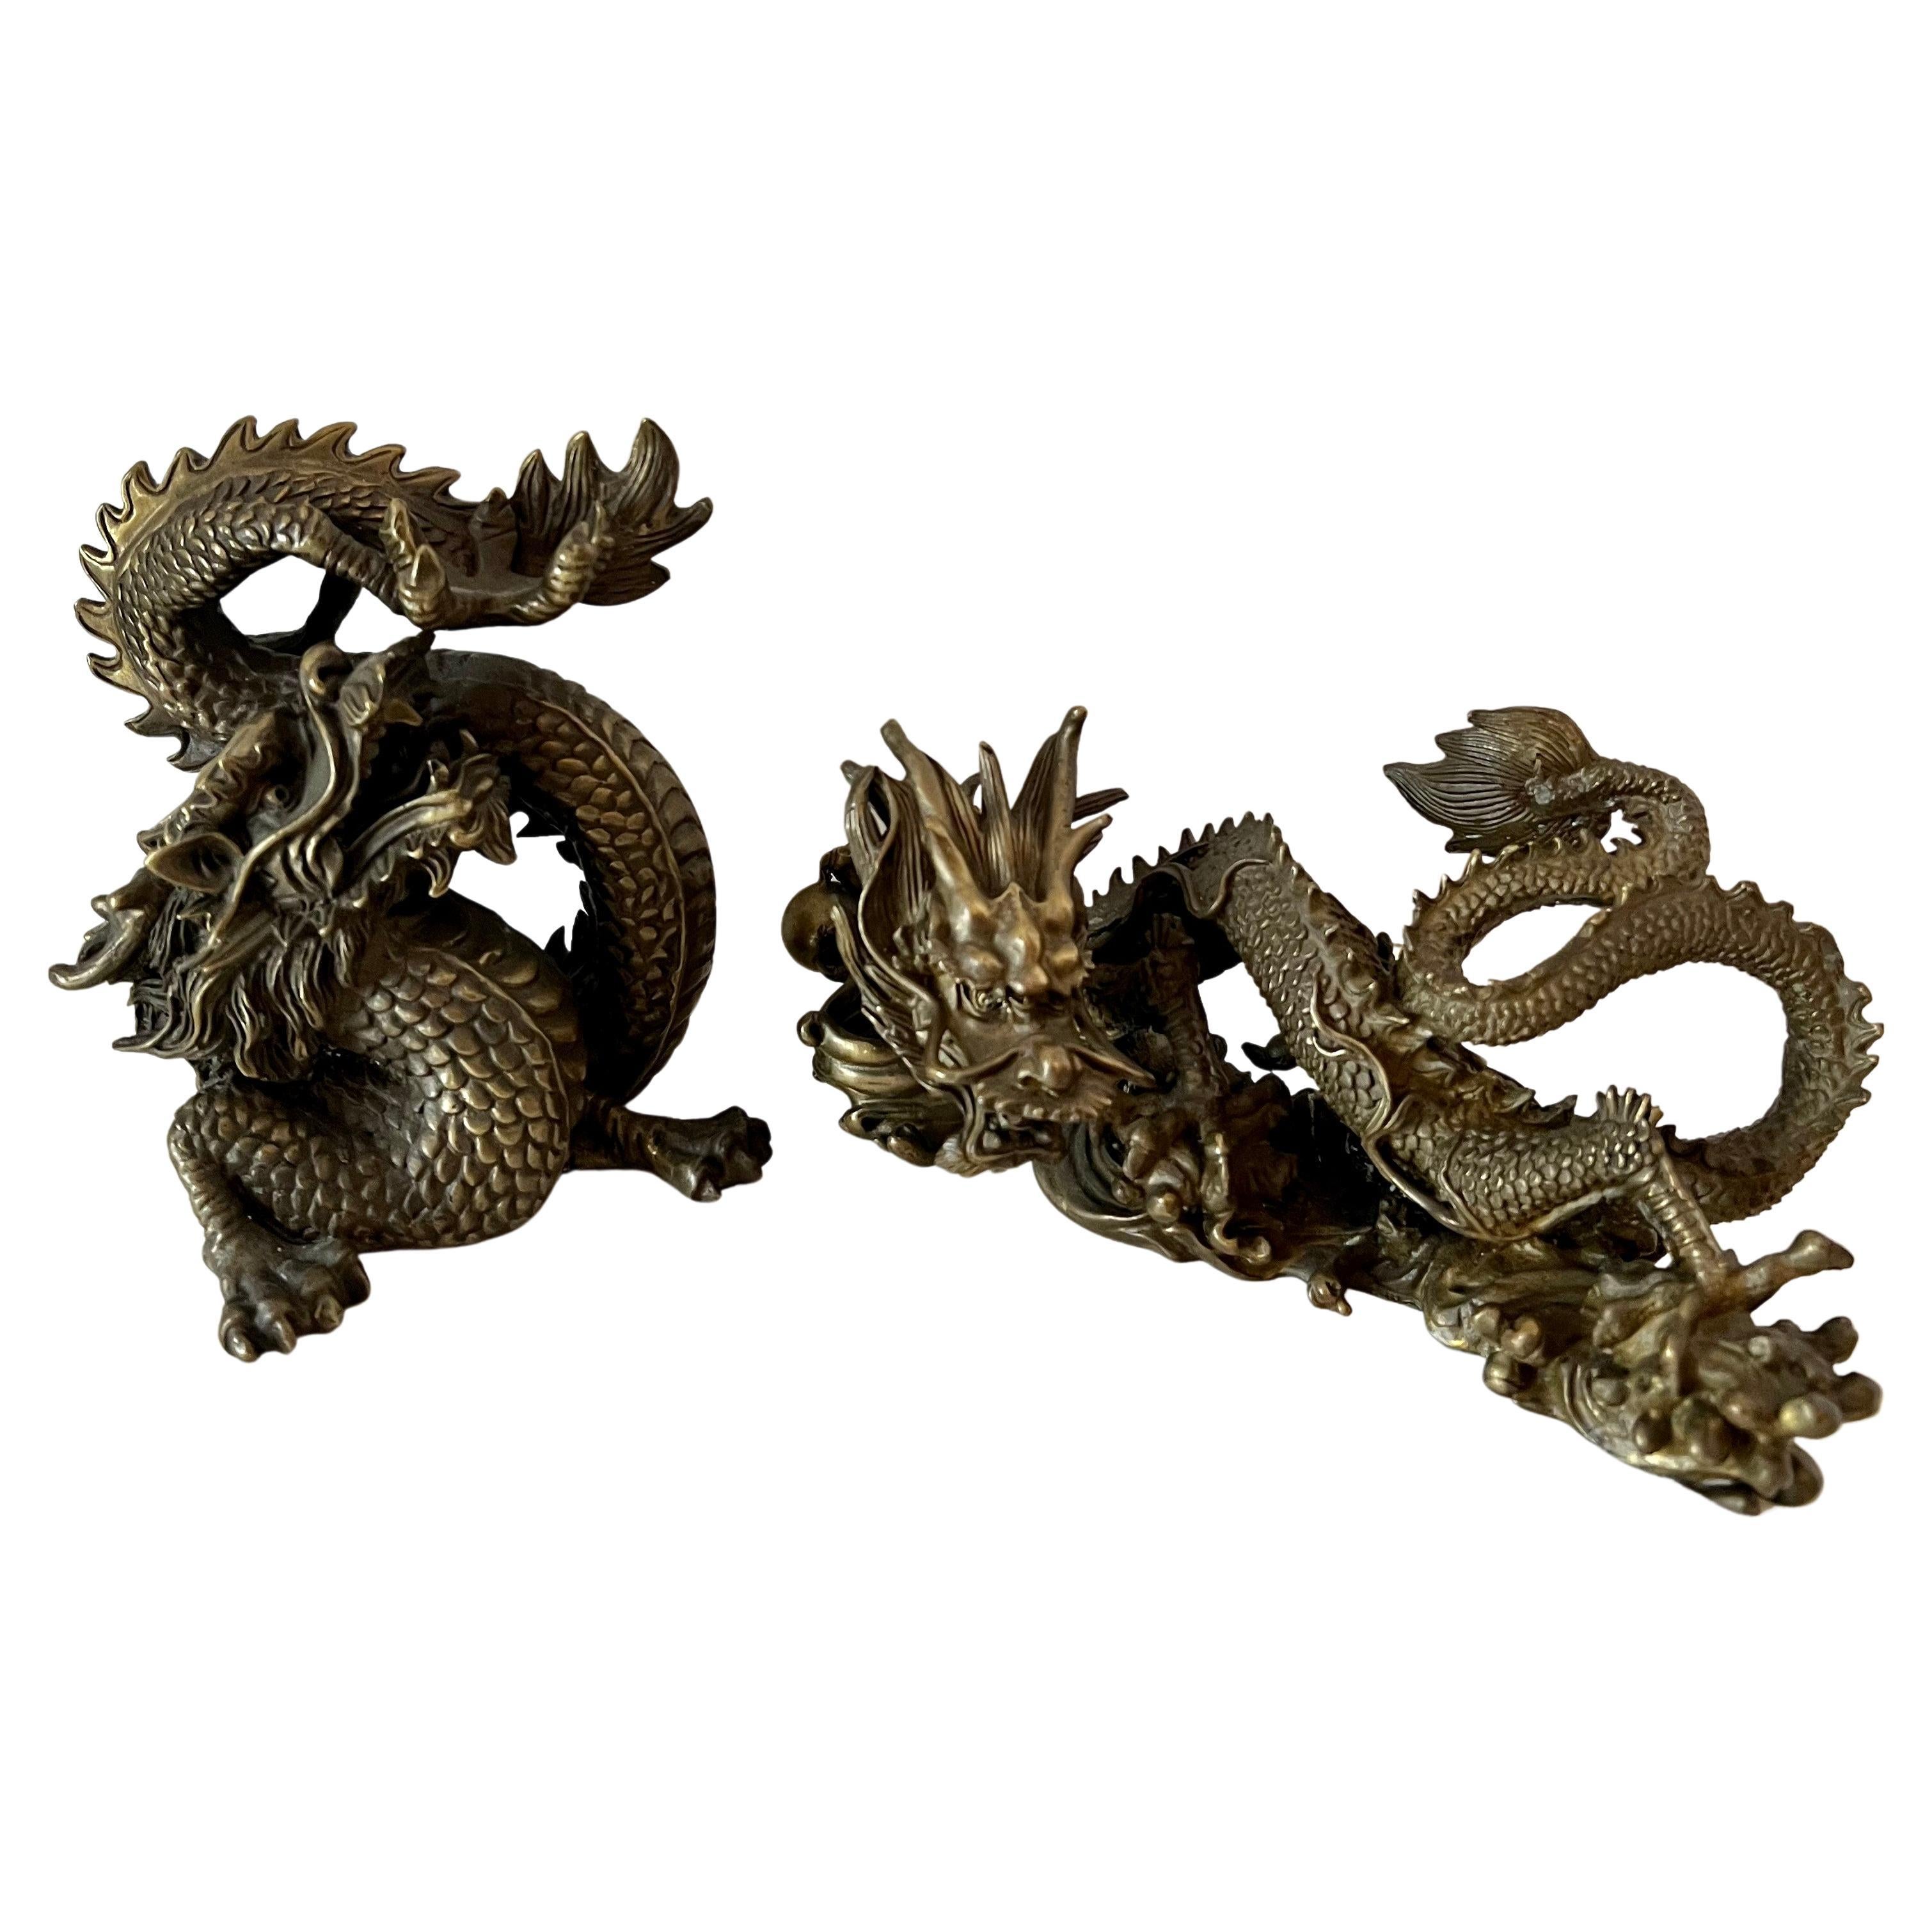 Pair of Bronze Asian Dragon Sculptures Bookends